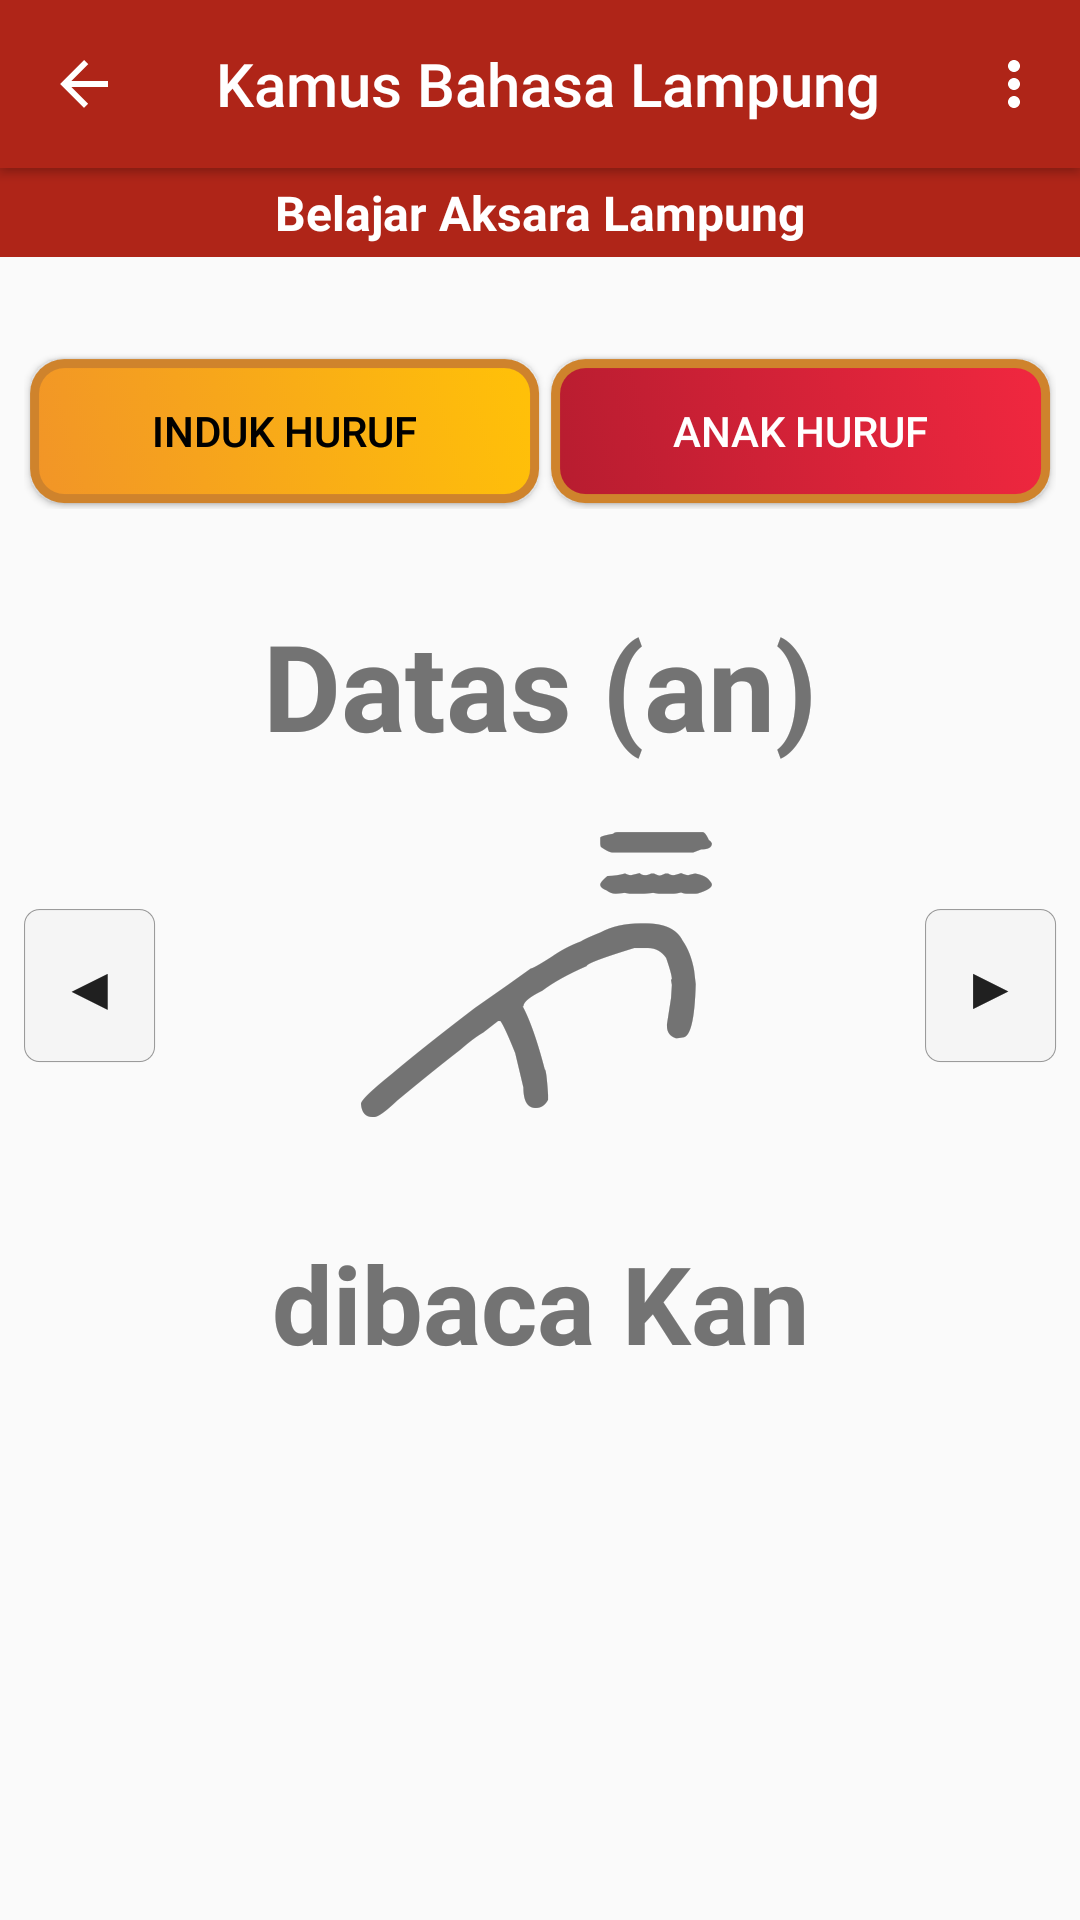 Kamus Bahasa Lampung Apk 4 0 Download For Android Download Kamus Bahasa Lampung Apk Latest Version Apkfab Com